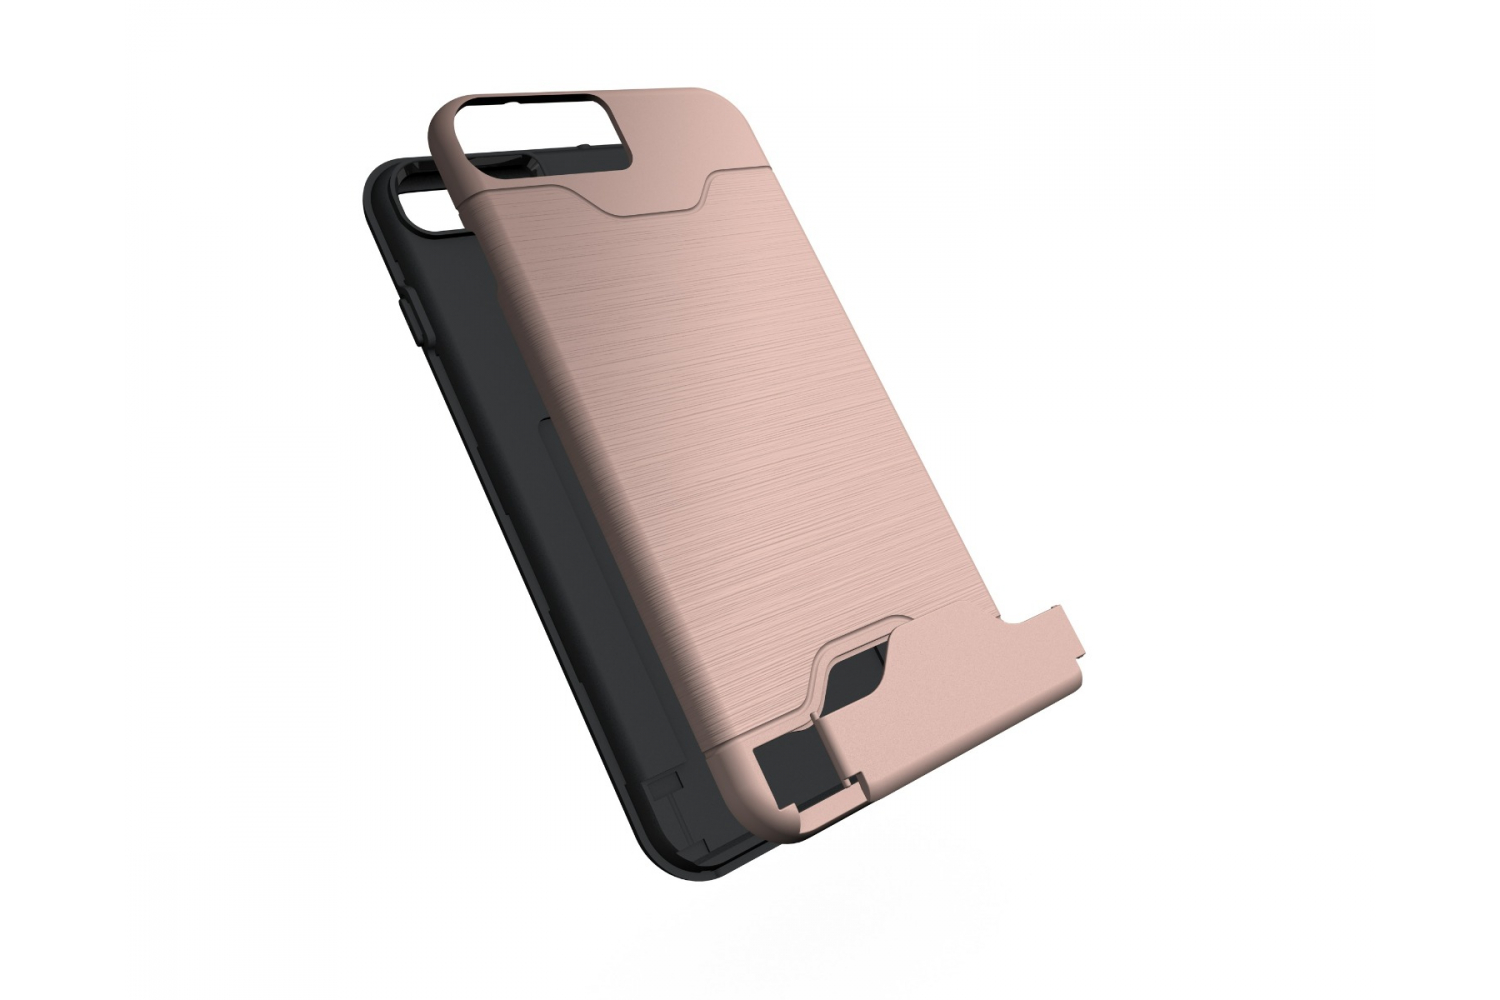 Iphone 7 Plus Back Cover Case Rose goud